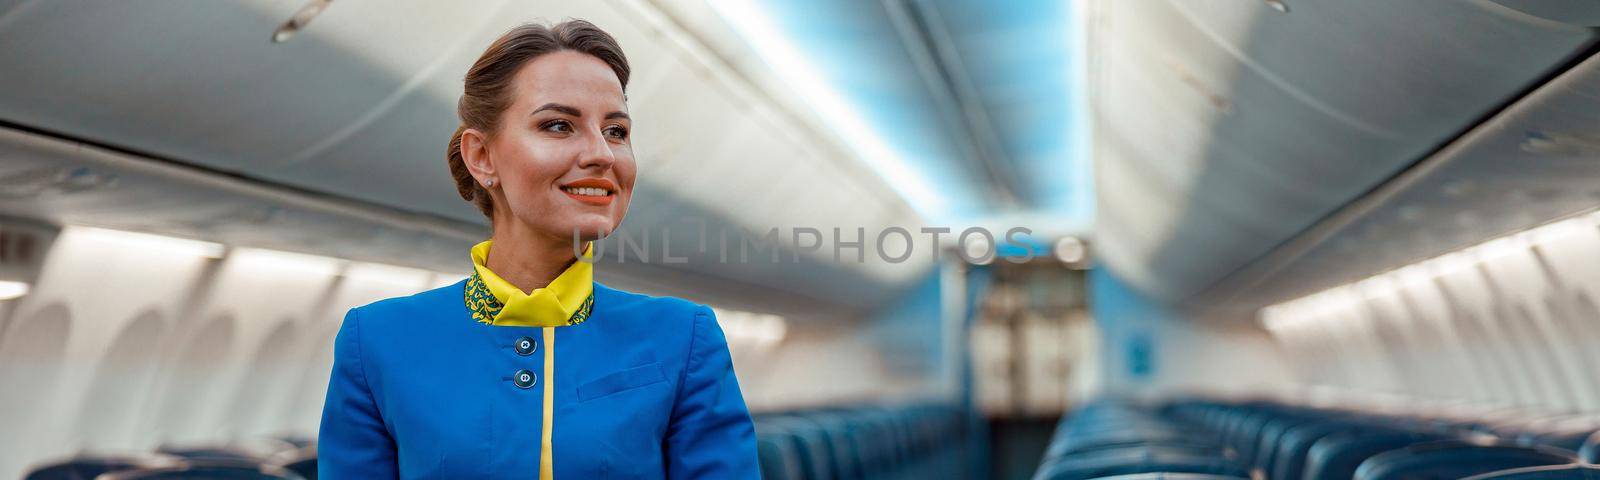 Cheerful woman stewardess in airline air hostess uniform standing in aisle of airplane passenger salon